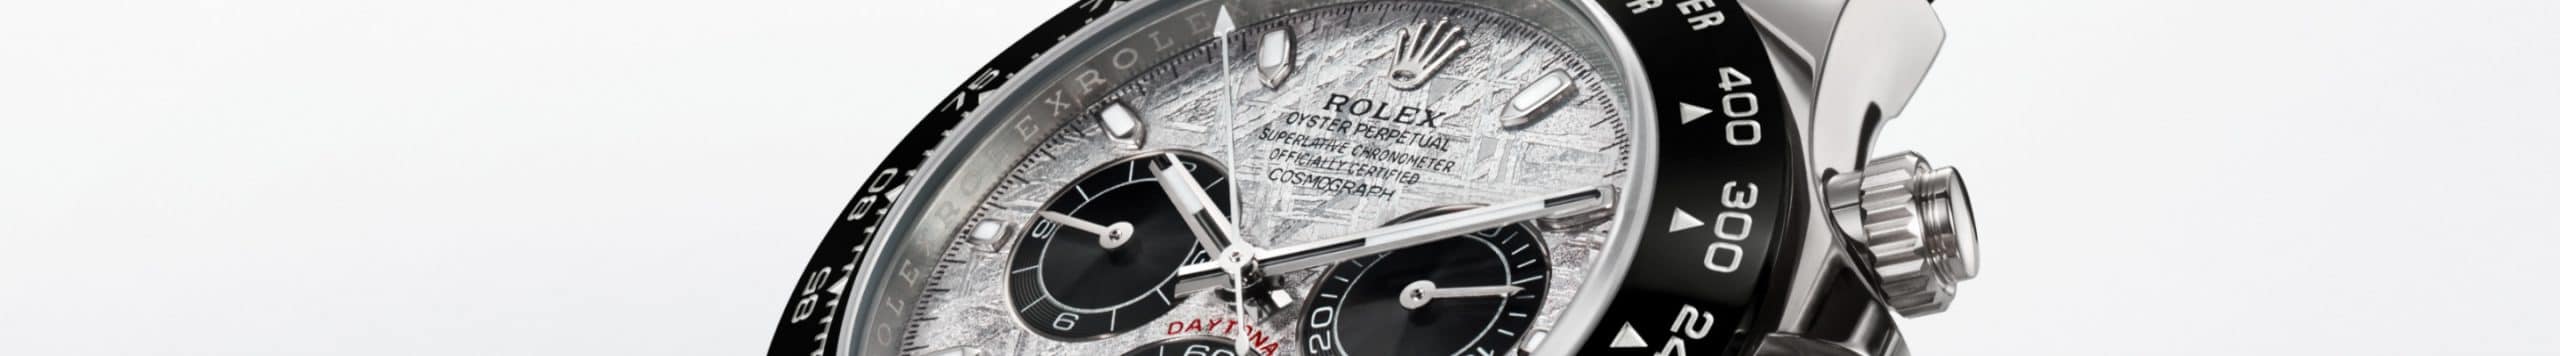 Rolex Cosmograph Daytona | Rolex Official Retailer - The Time Place Singapore